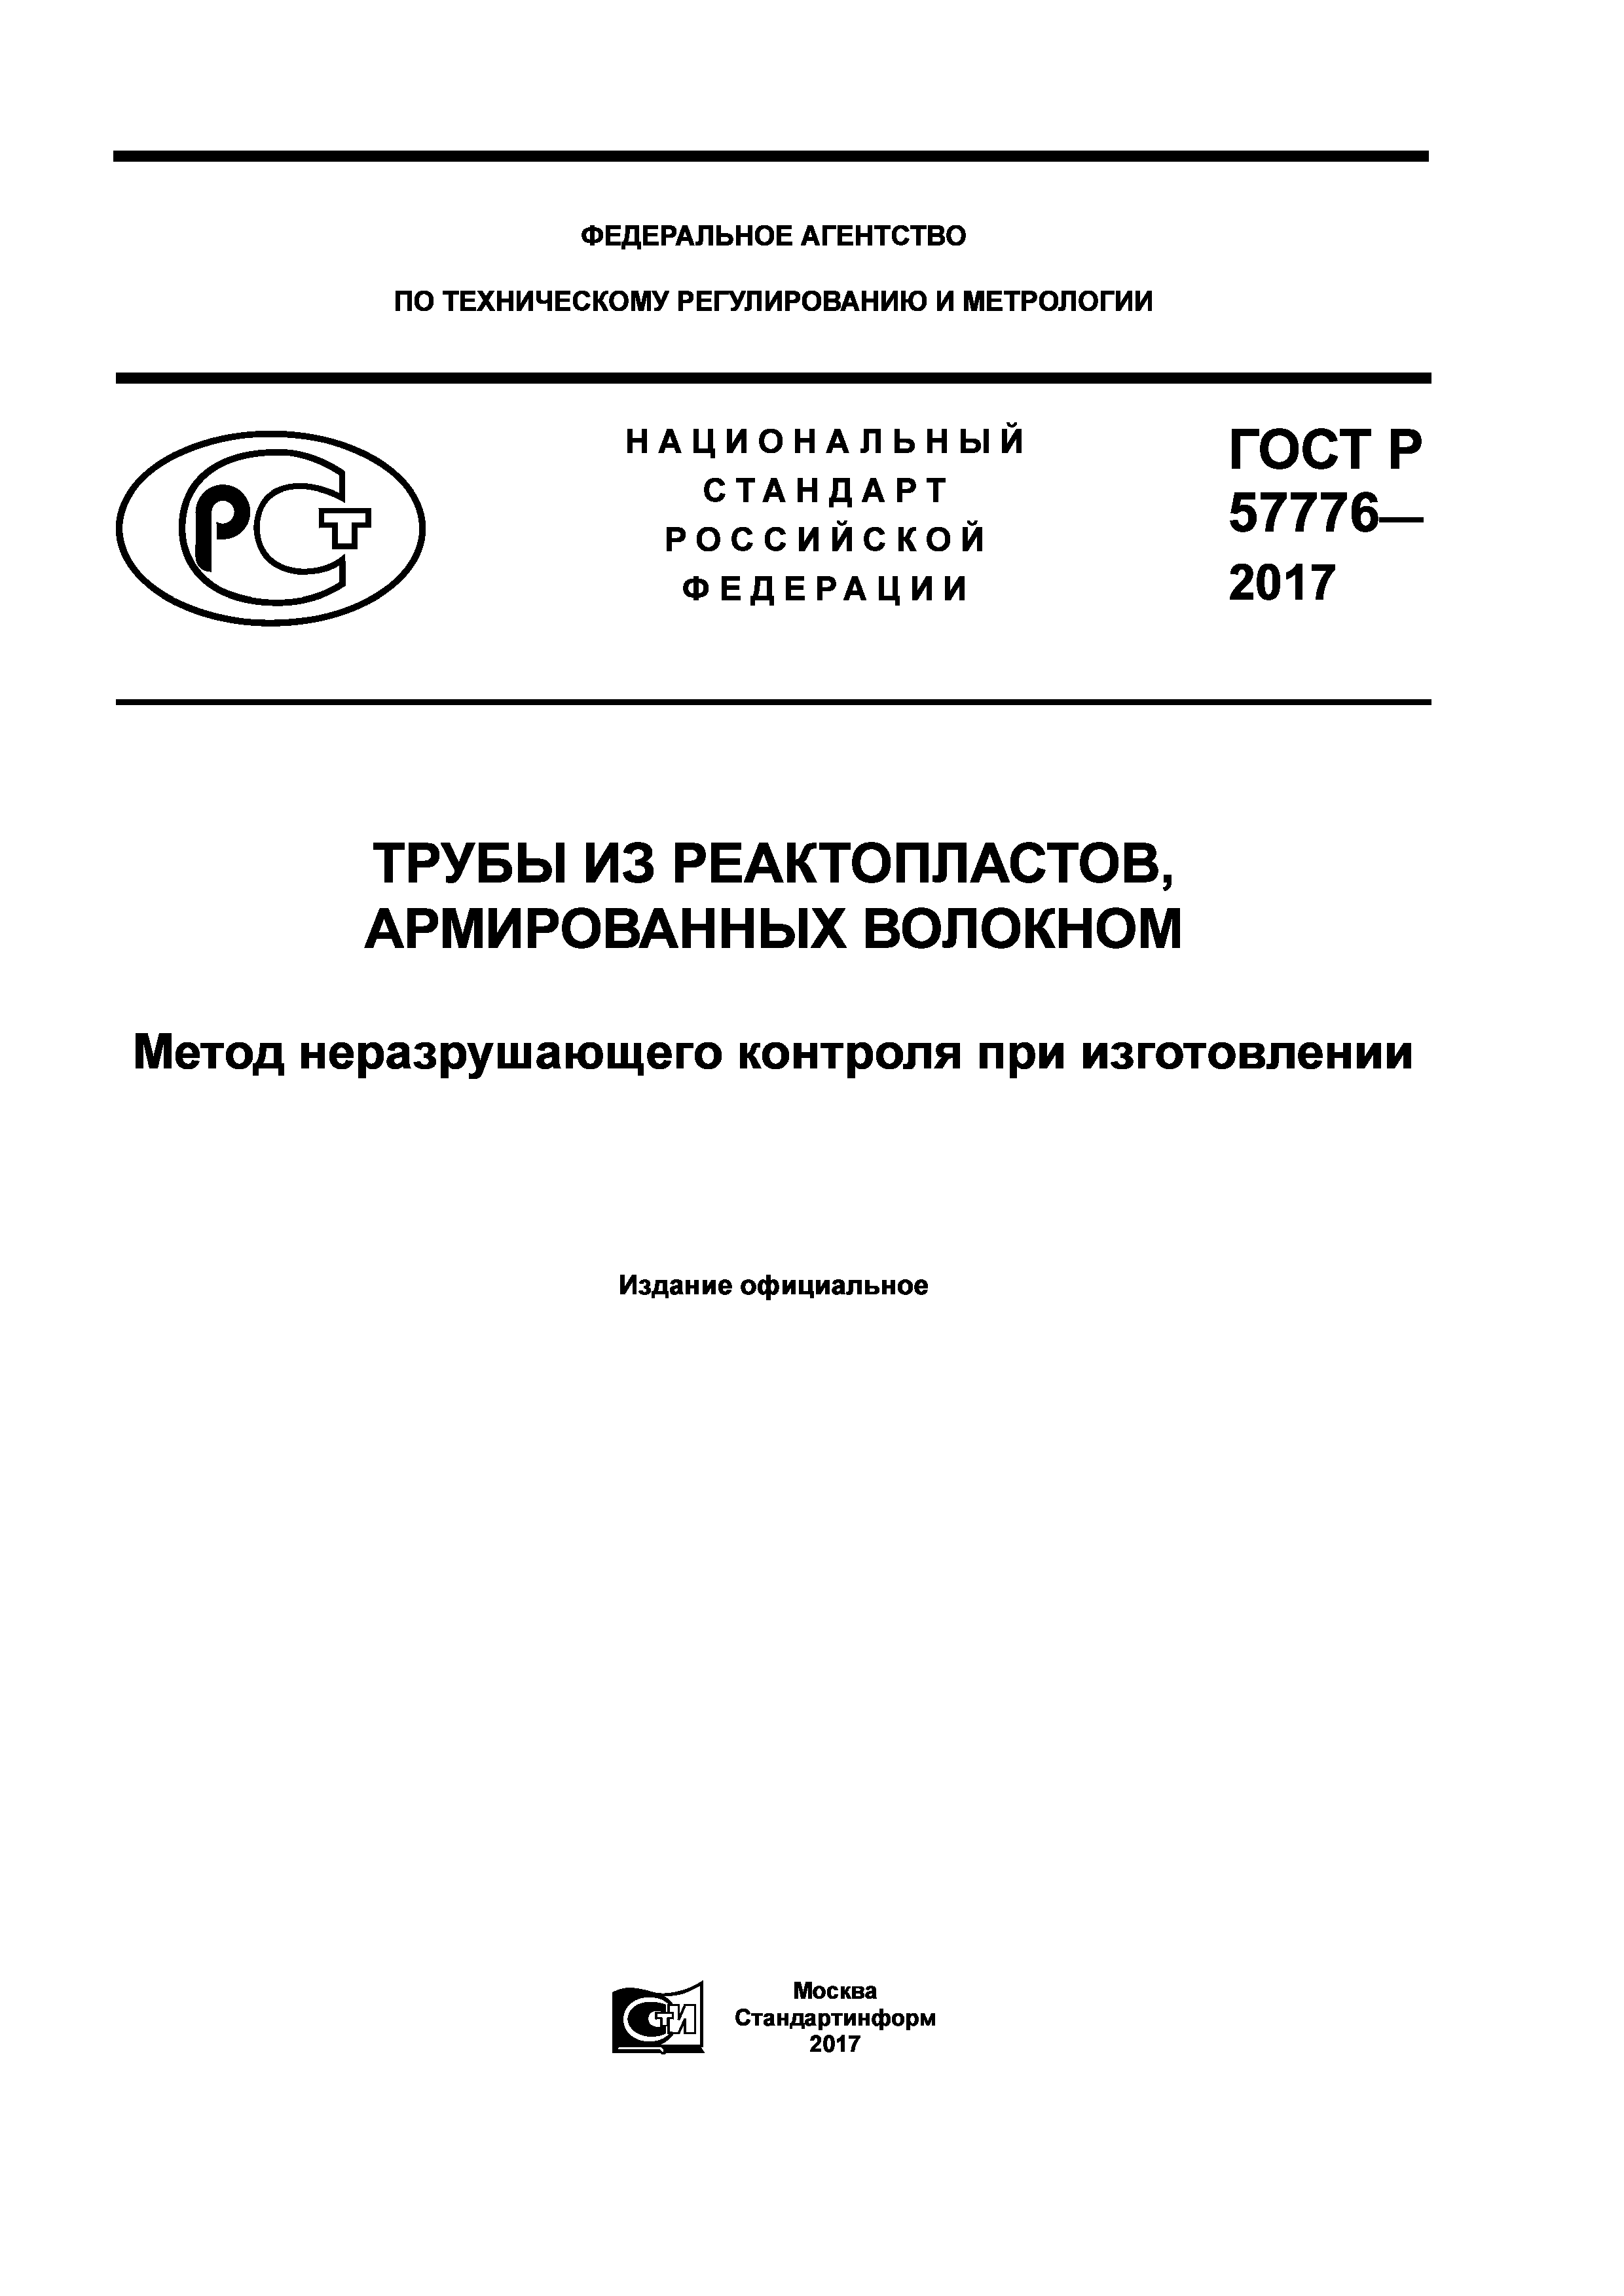 ГОСТ Р 57776-2017